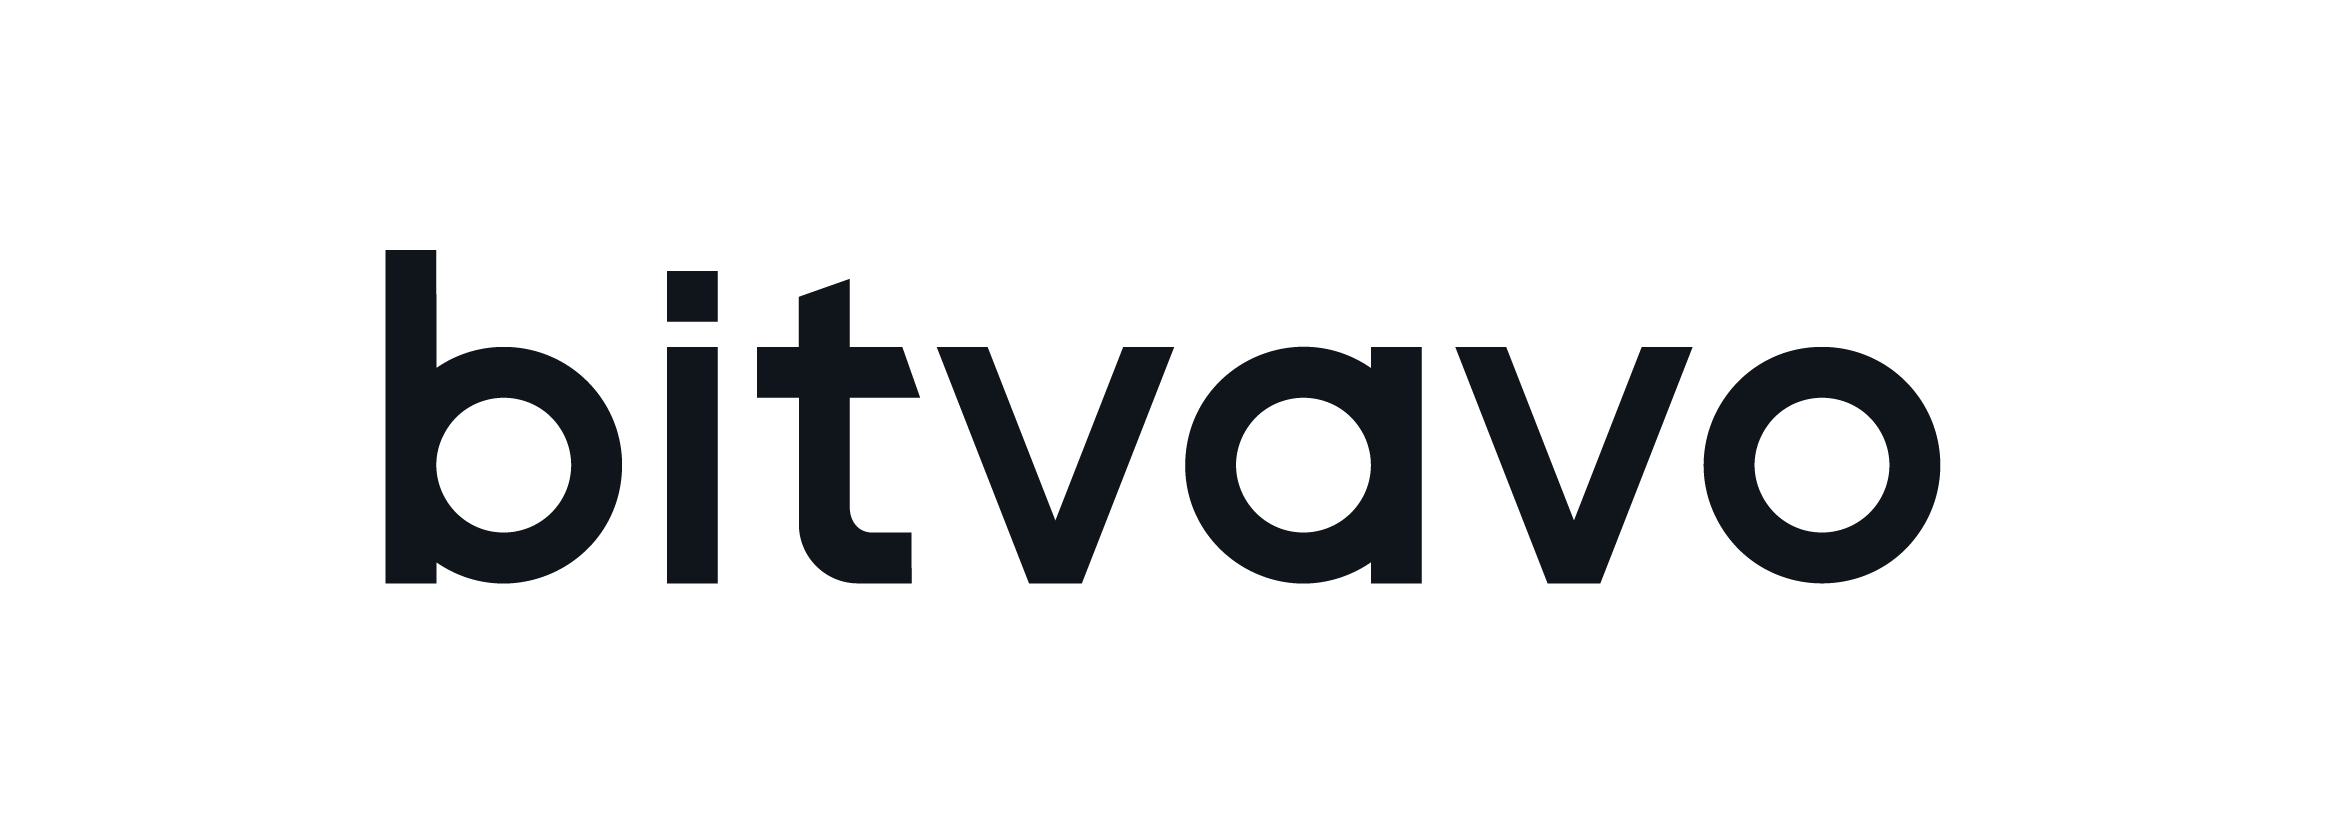 bitvavo-logotype-black